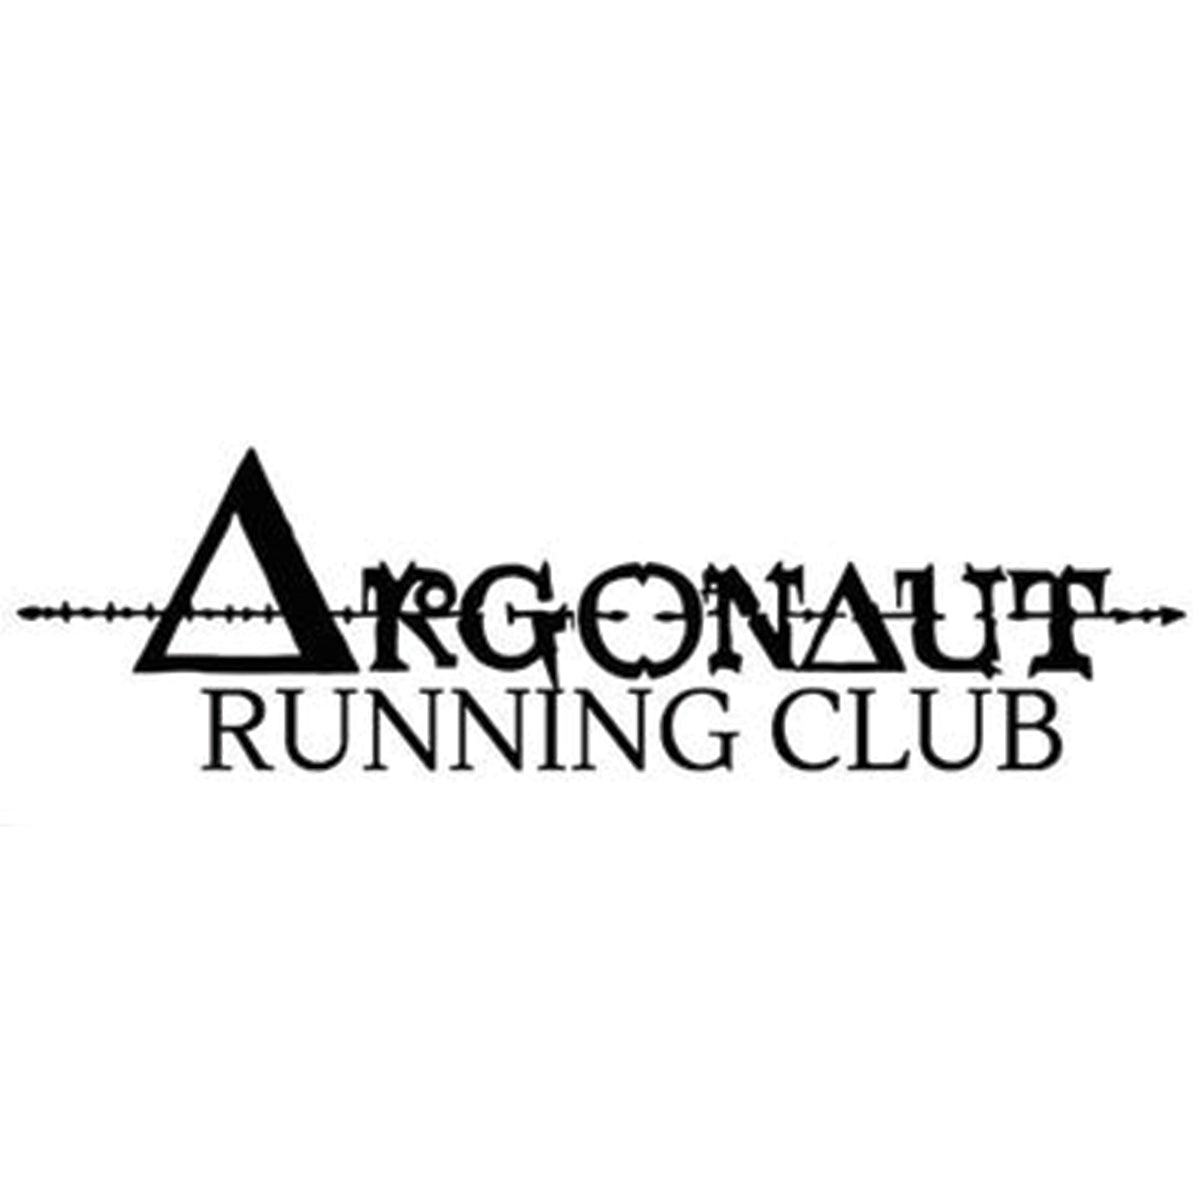 Argonaut Running Club